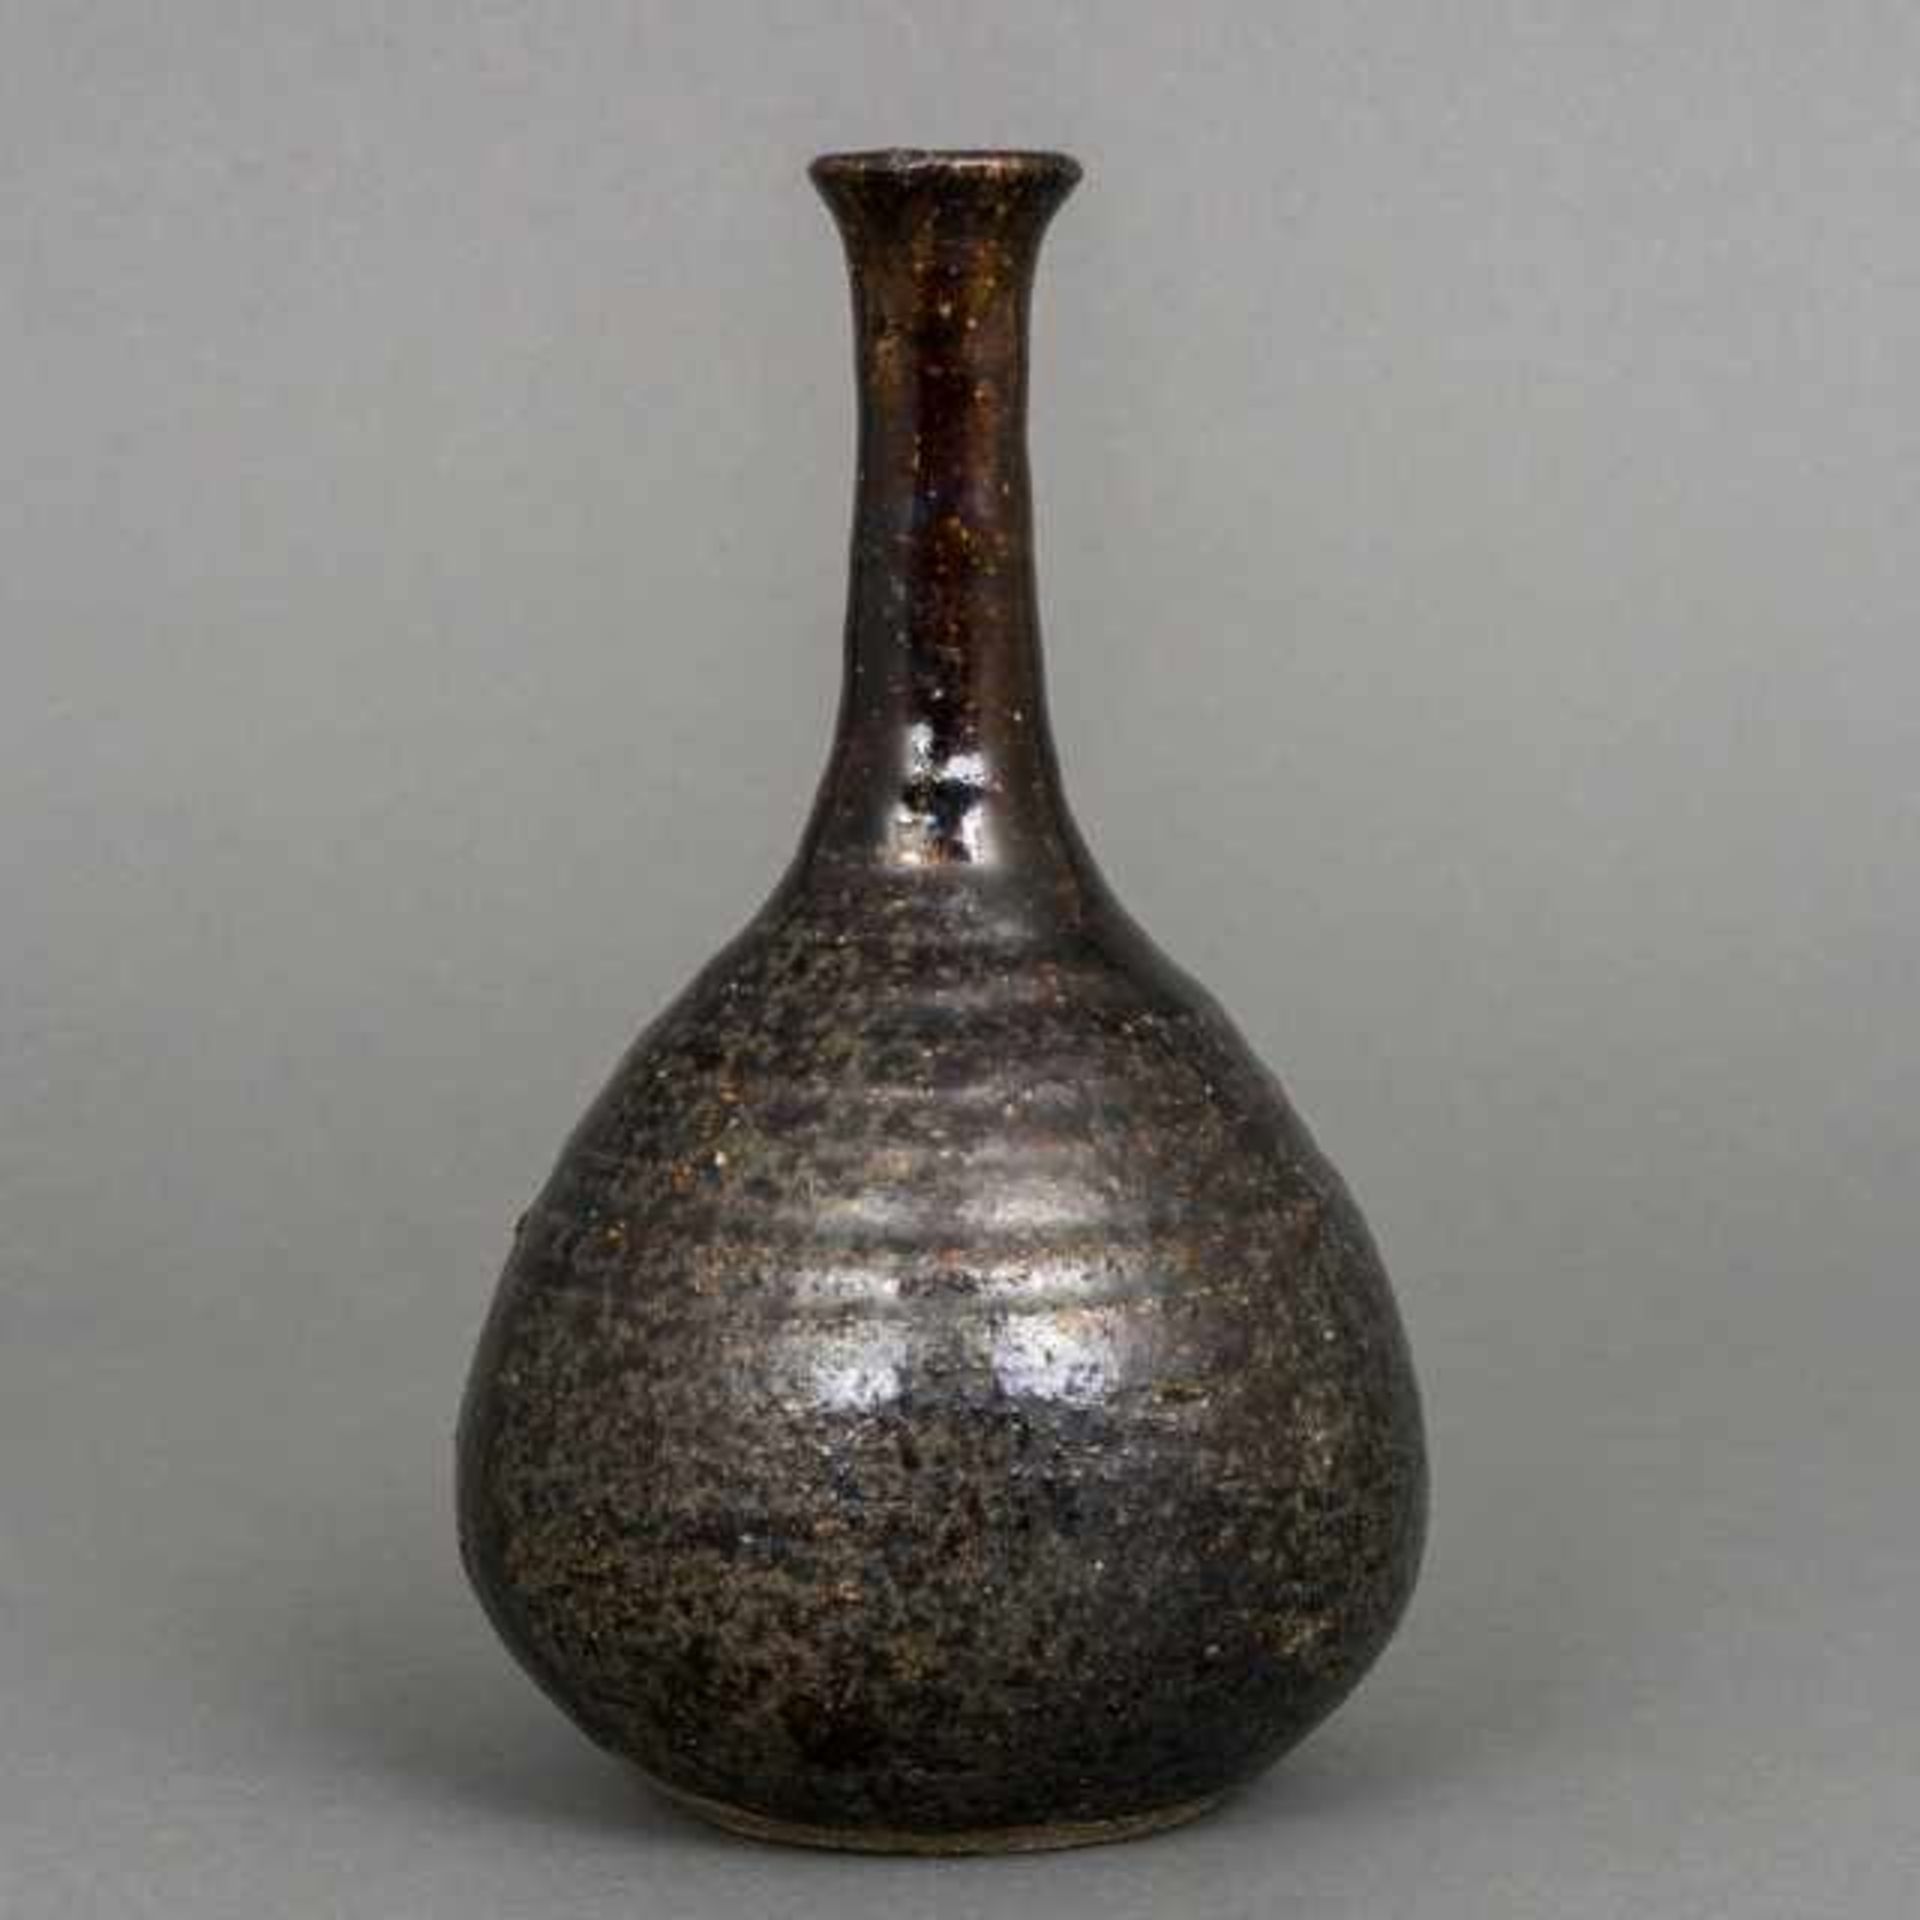 Seto ware bottle vase with dark brown glaze, Japan, 19th century, provenance: Kunsthandel